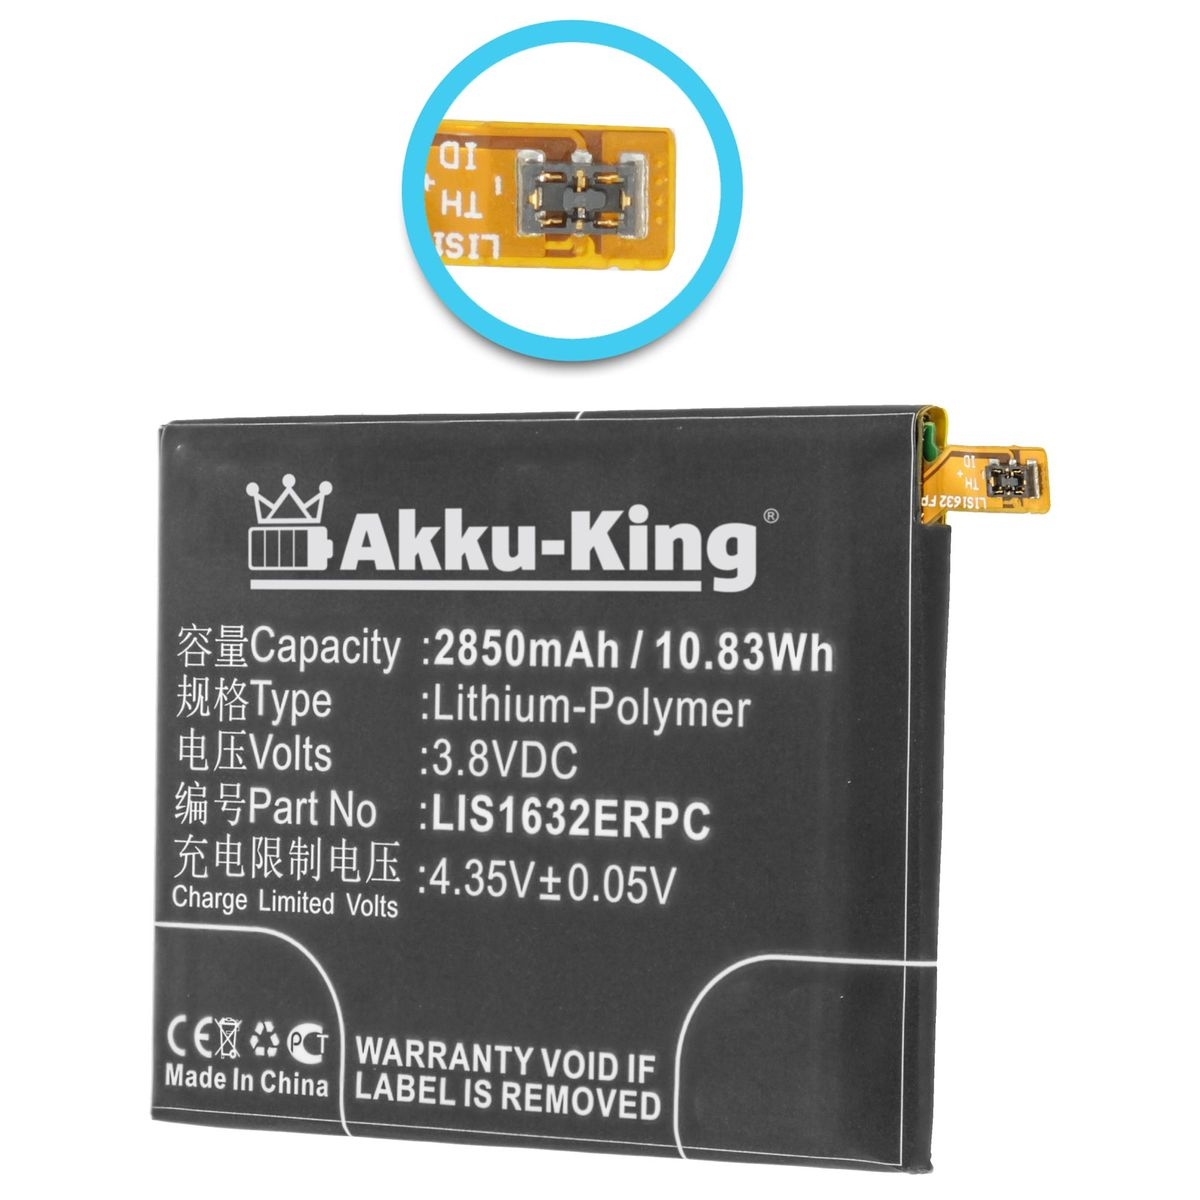 AKKU-KING Akku kompatibel mit Sony Handy-Akku, 3.8 LIS1632ERPC Volt, Li-Polymer 2850mAh